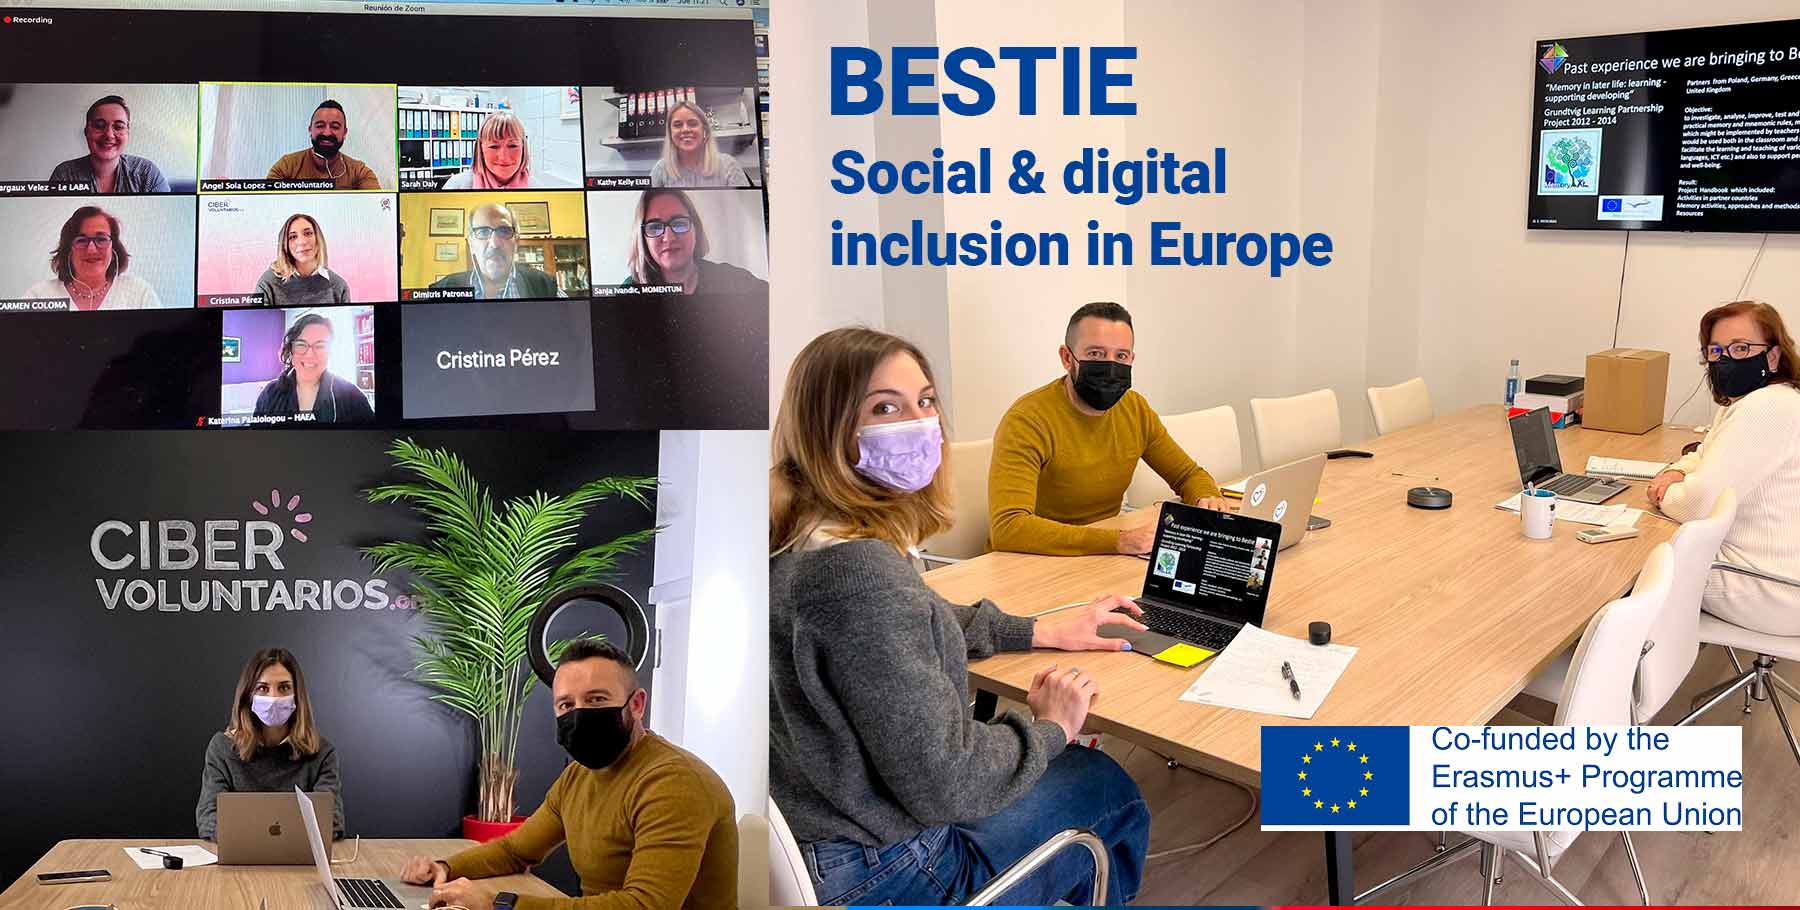 BESTIE: the new Erasmus Plus project of Fundación Cibervoluntarios to combat digital exclusion in Europe